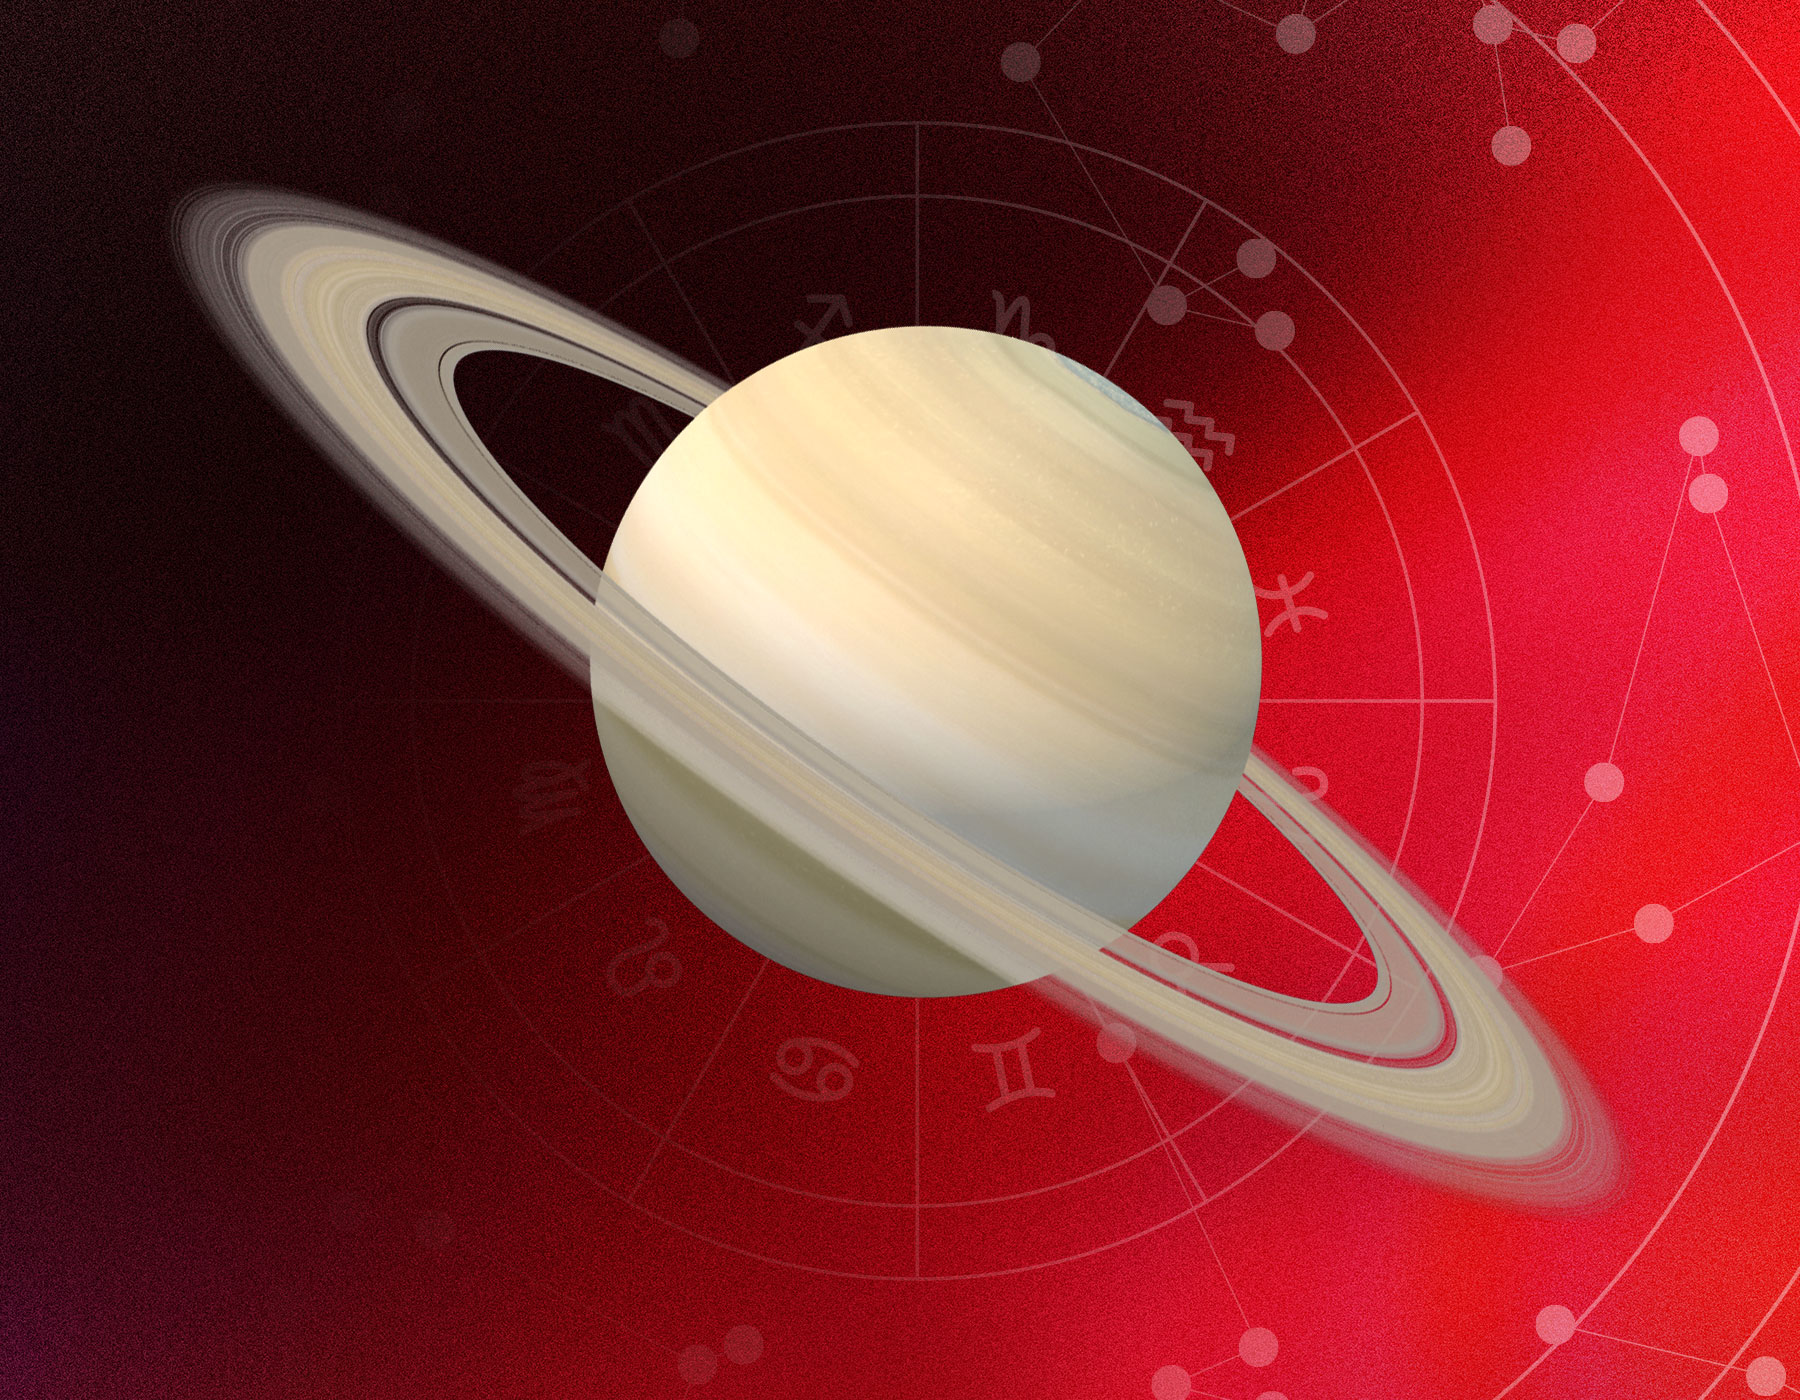 Astrological Rmedies for Saturn